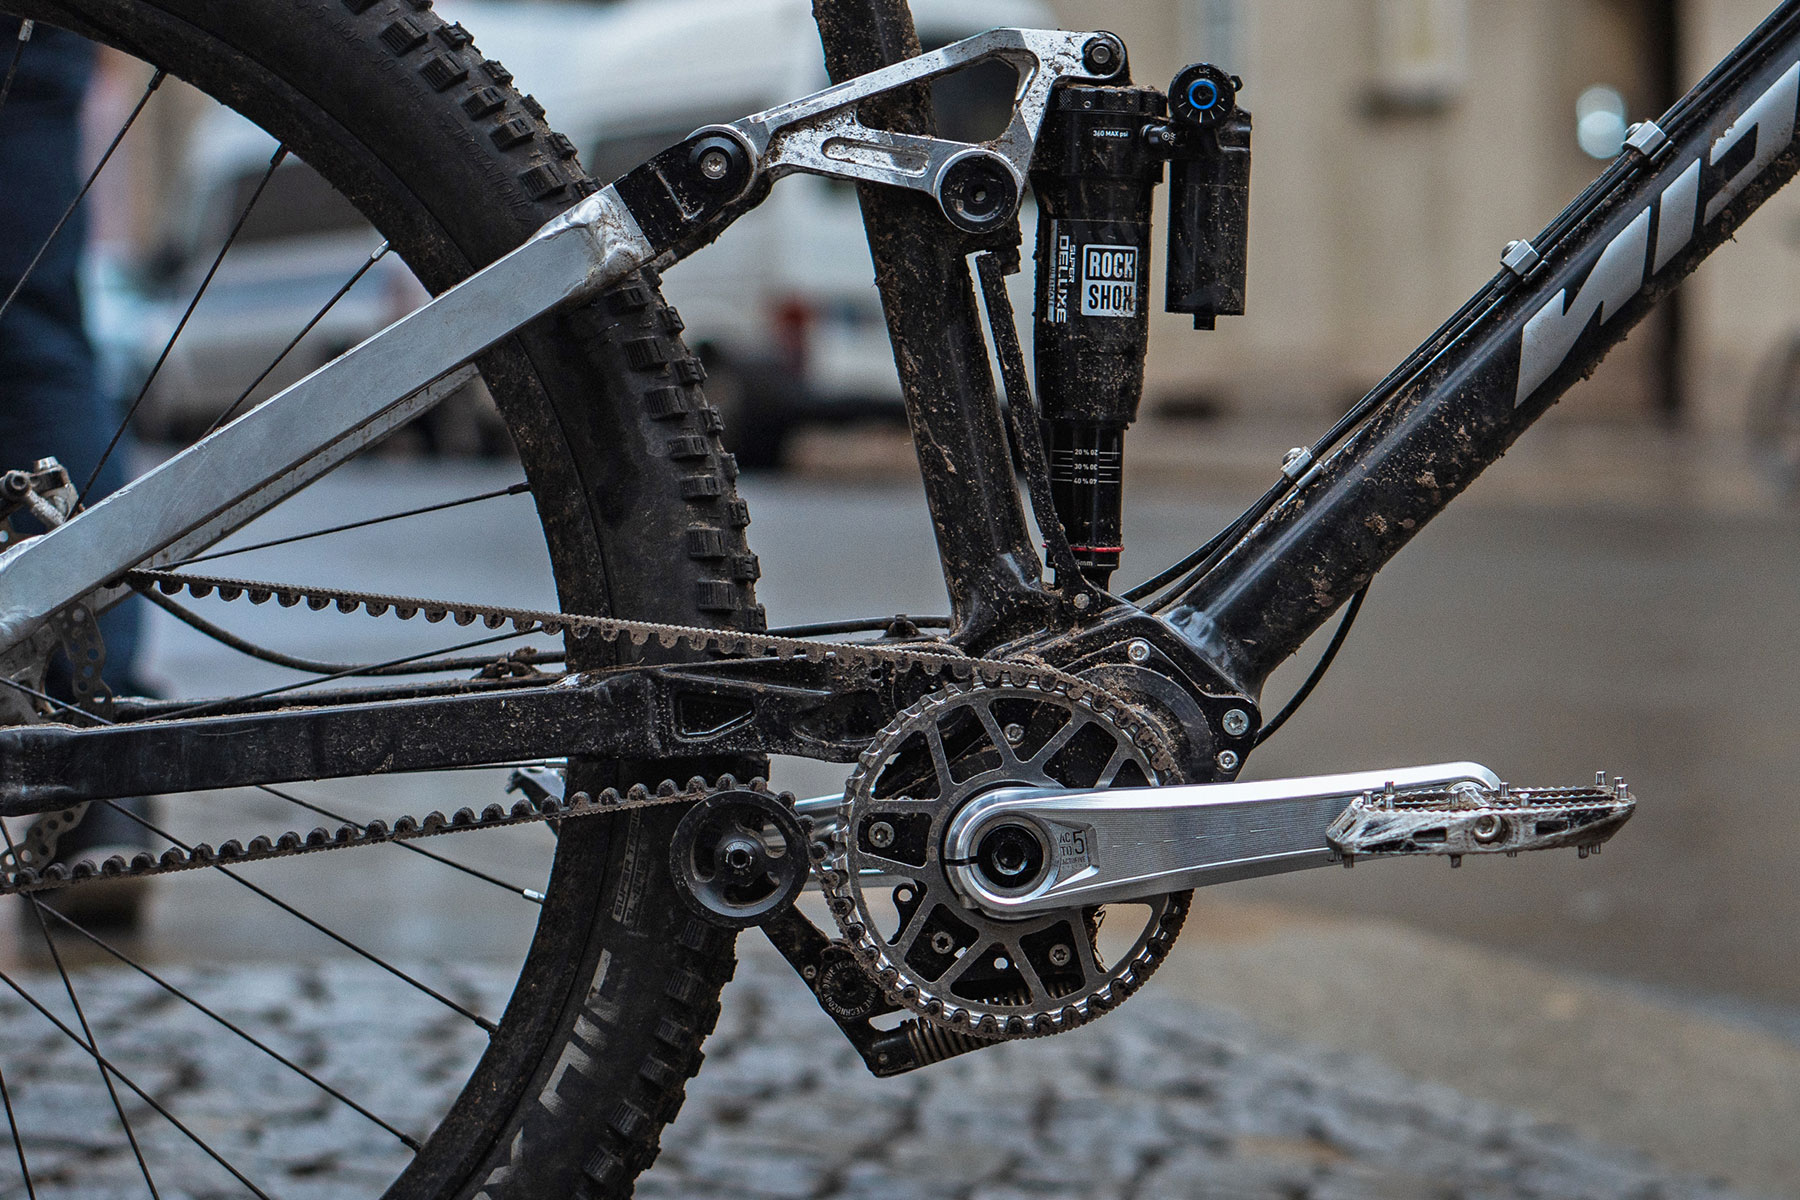 Actofive Signature X Pinion CNC-machined gearbox bike crankset, Nicolai Saturn test bike